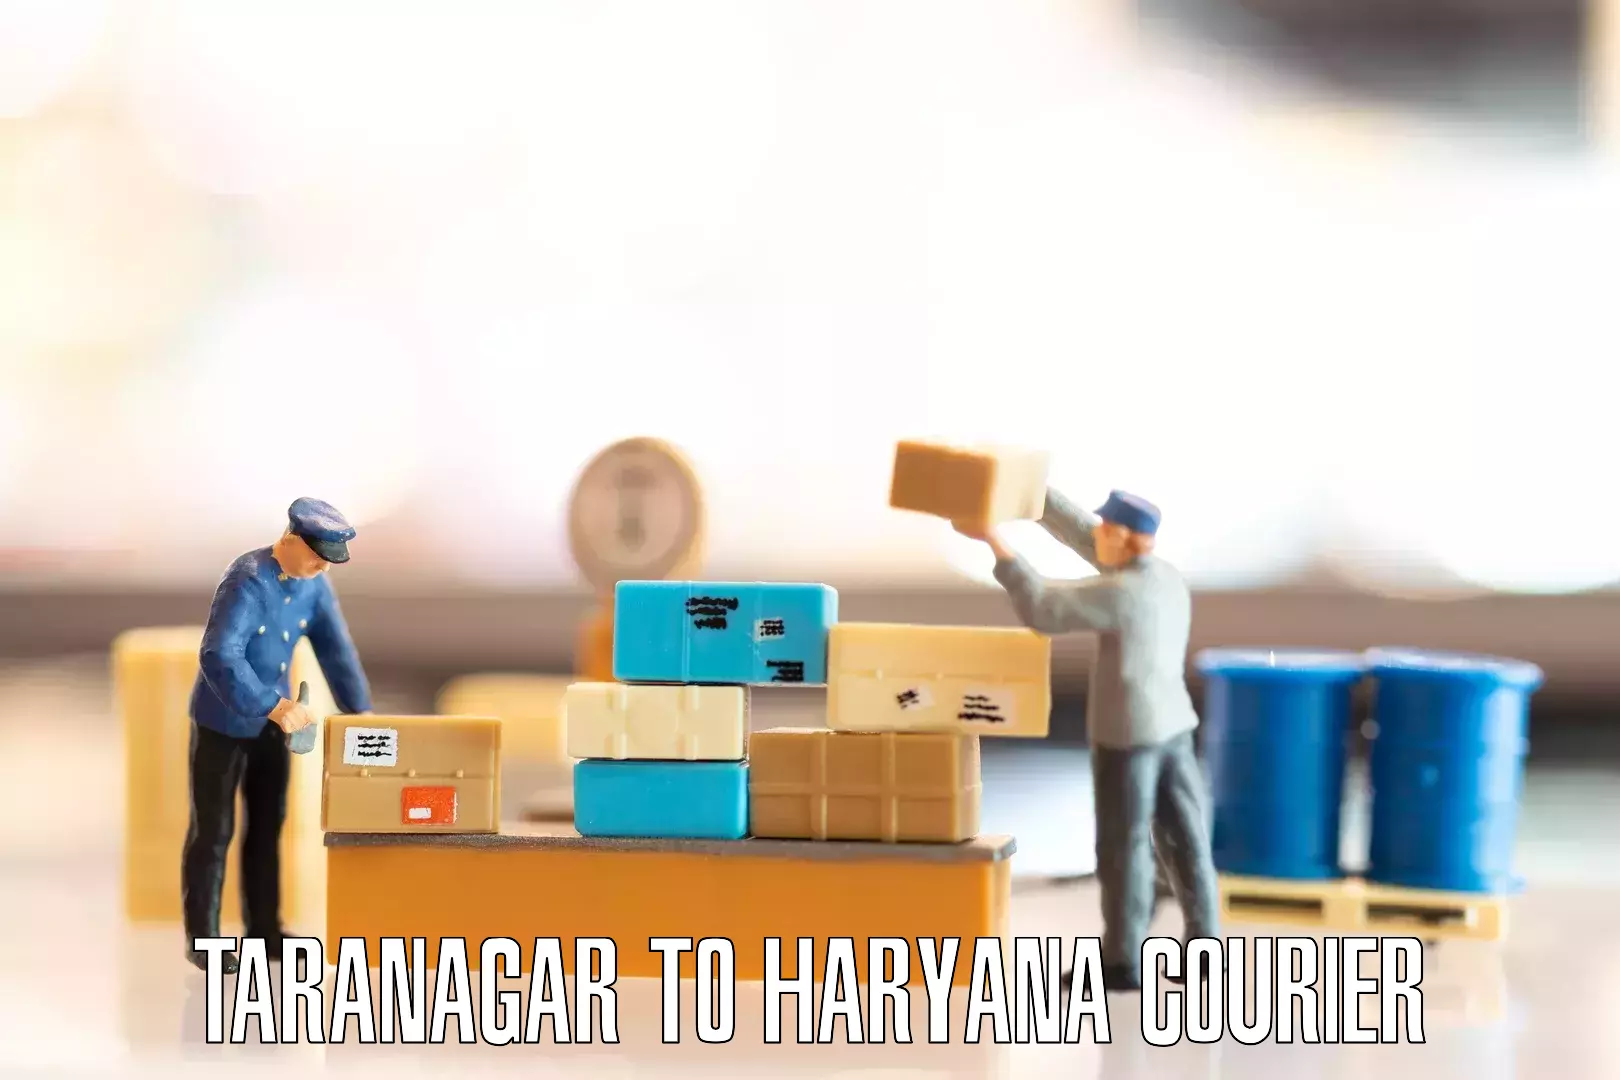 Furniture relocation experts Taranagar to Gurgaon